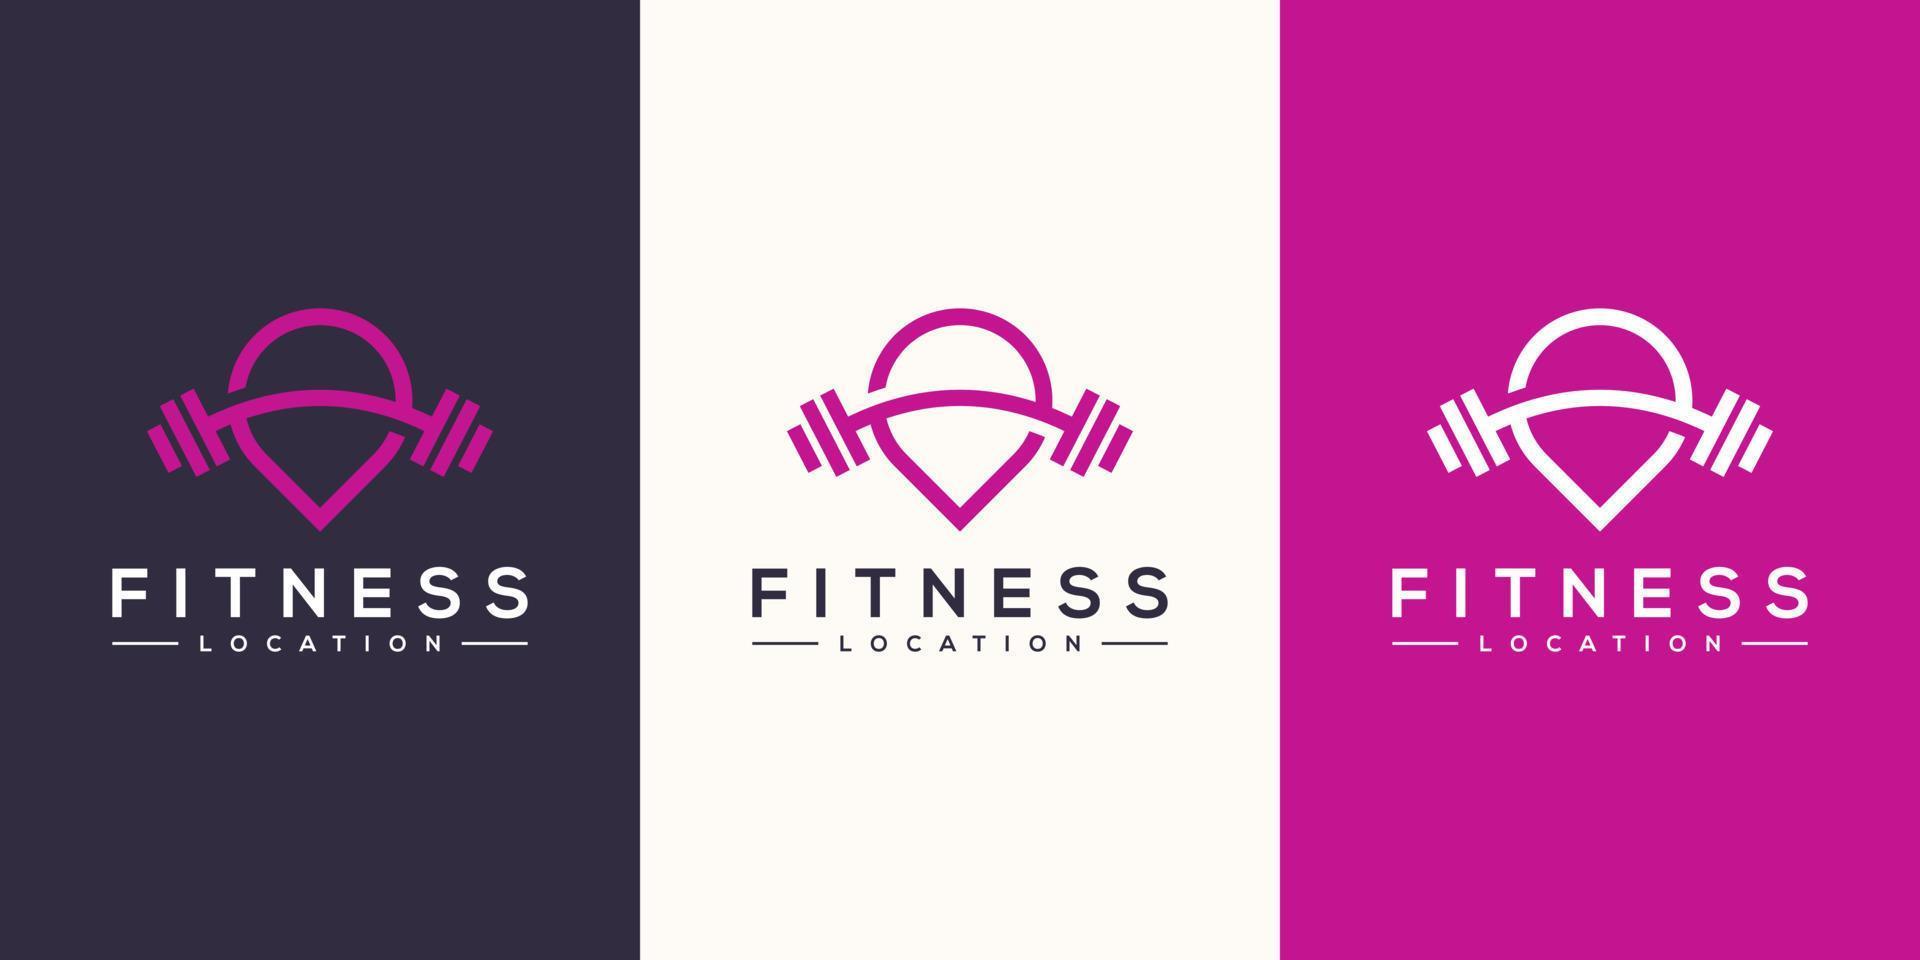 Fitness-Standort-Logo-Vektor-Design vektor